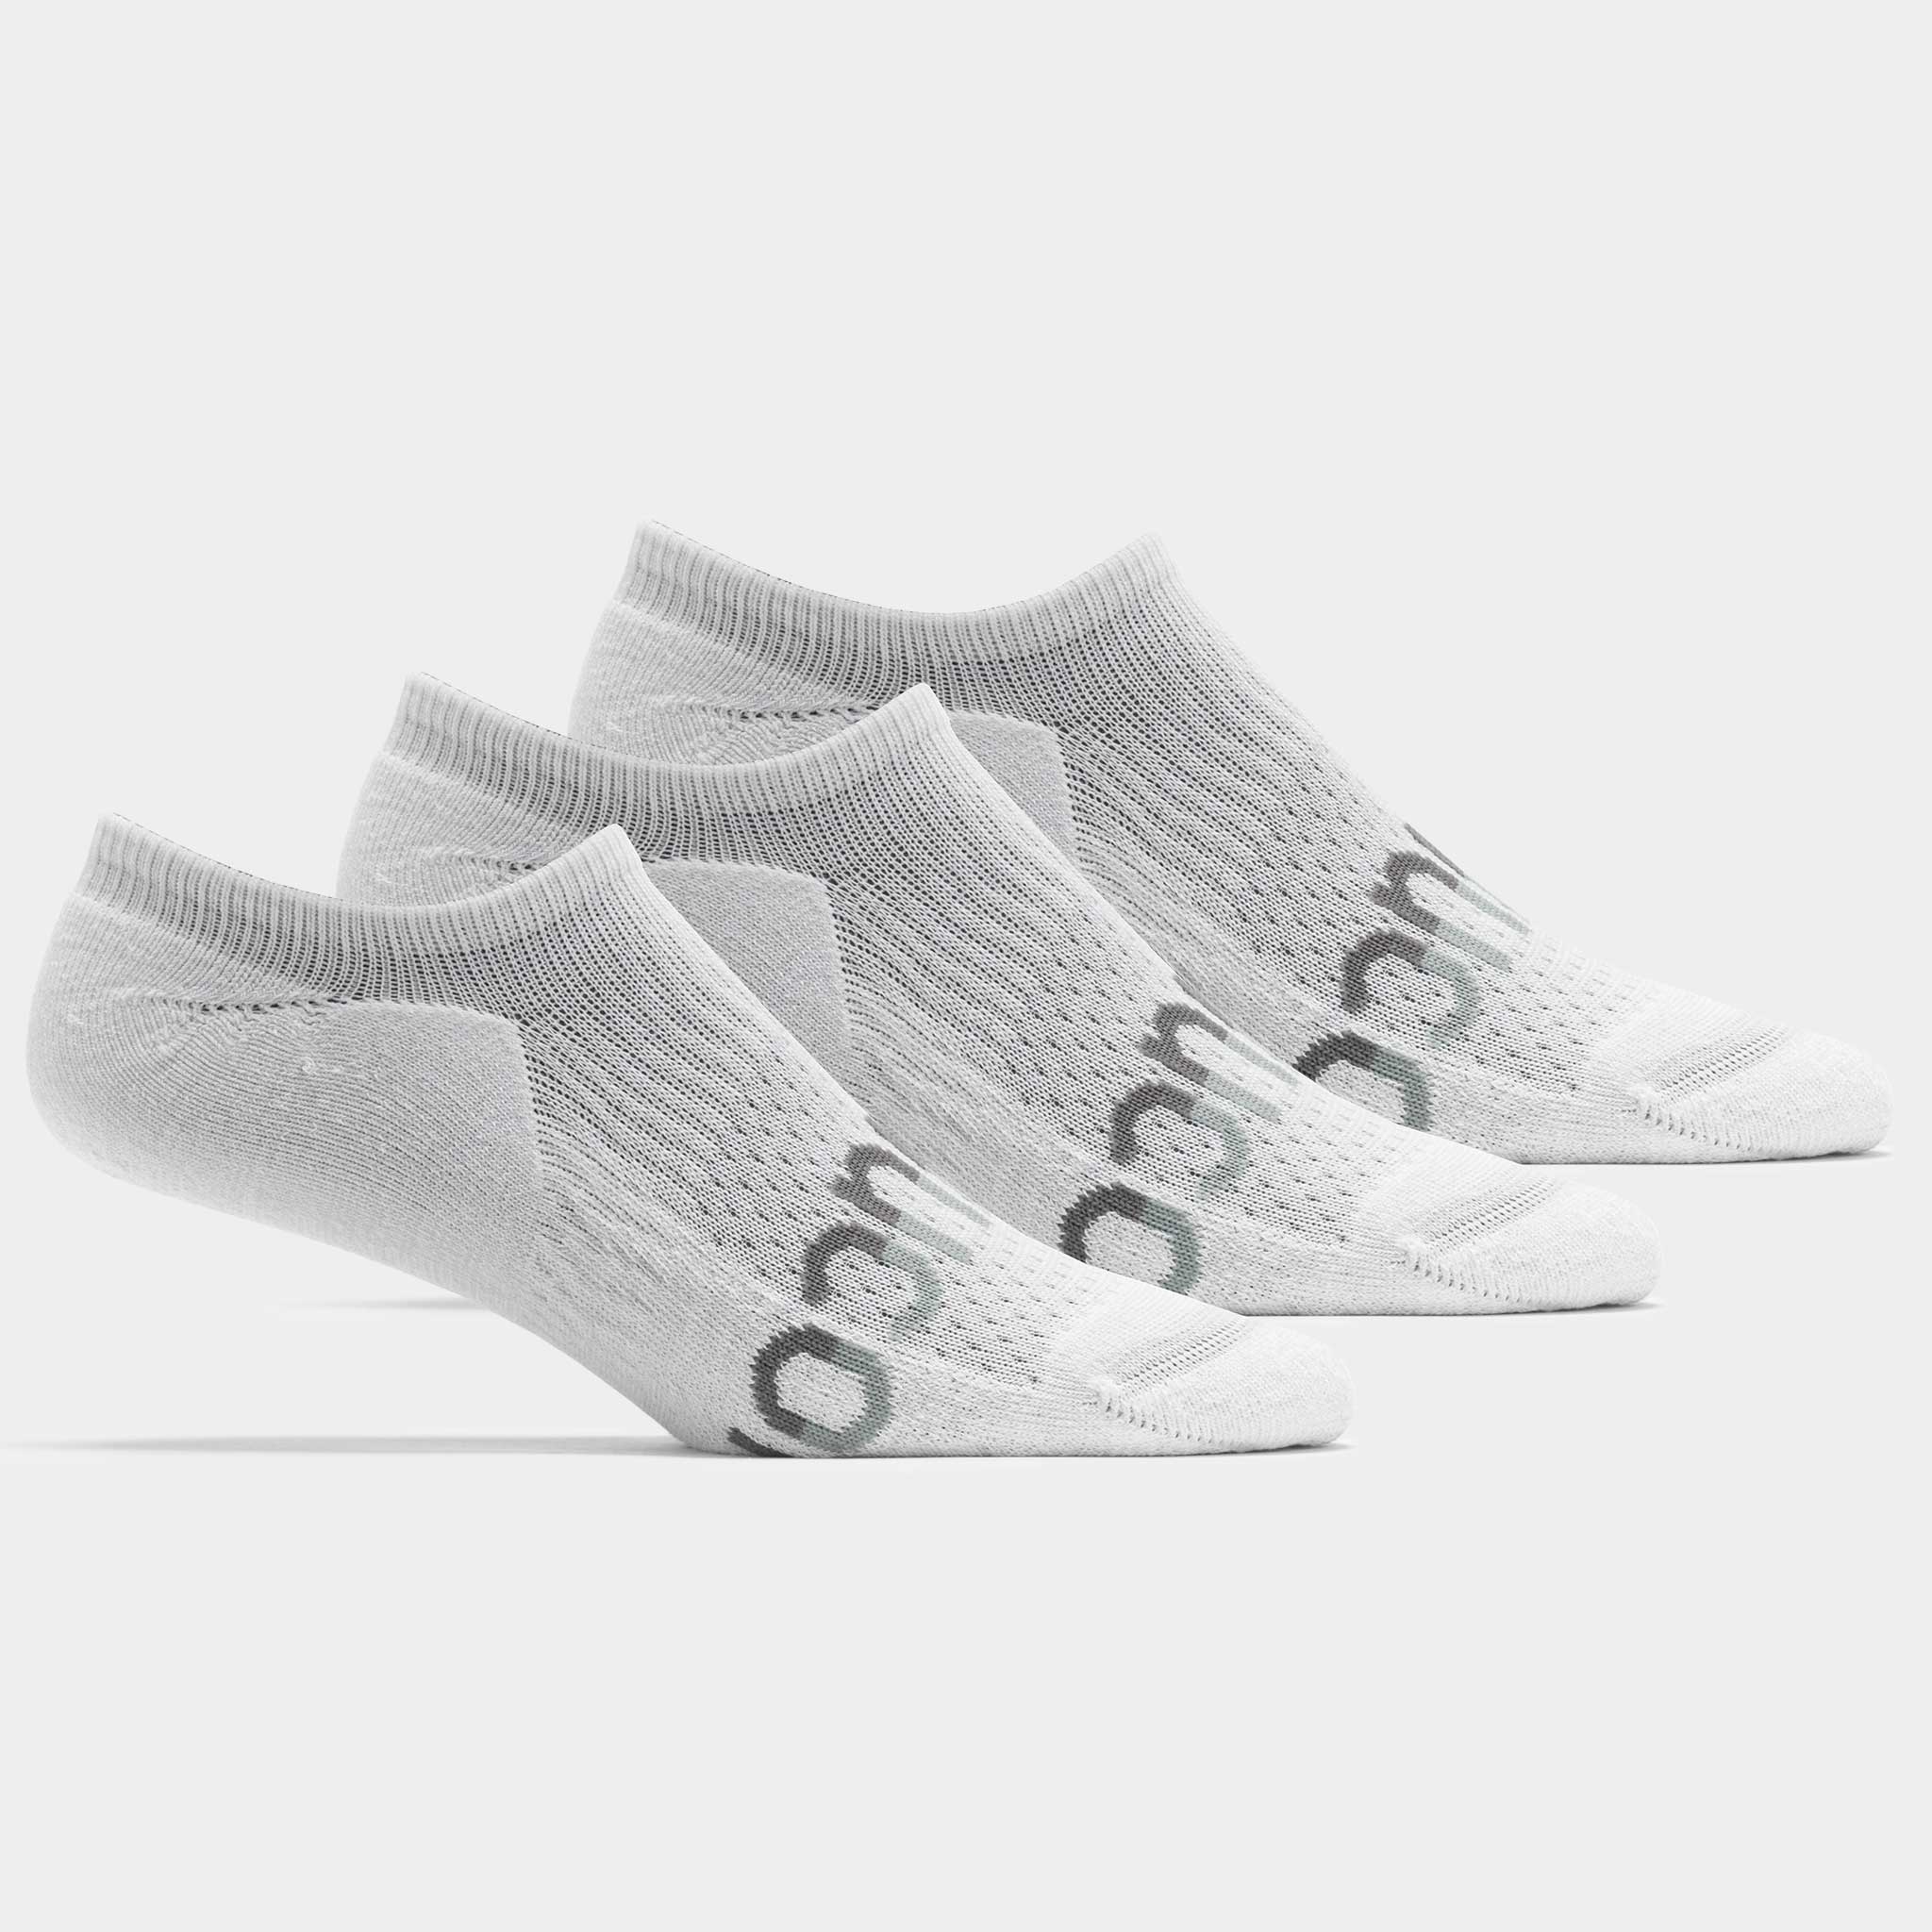 Saucony Inferno Cushion Sneaker Socks 3 Pack